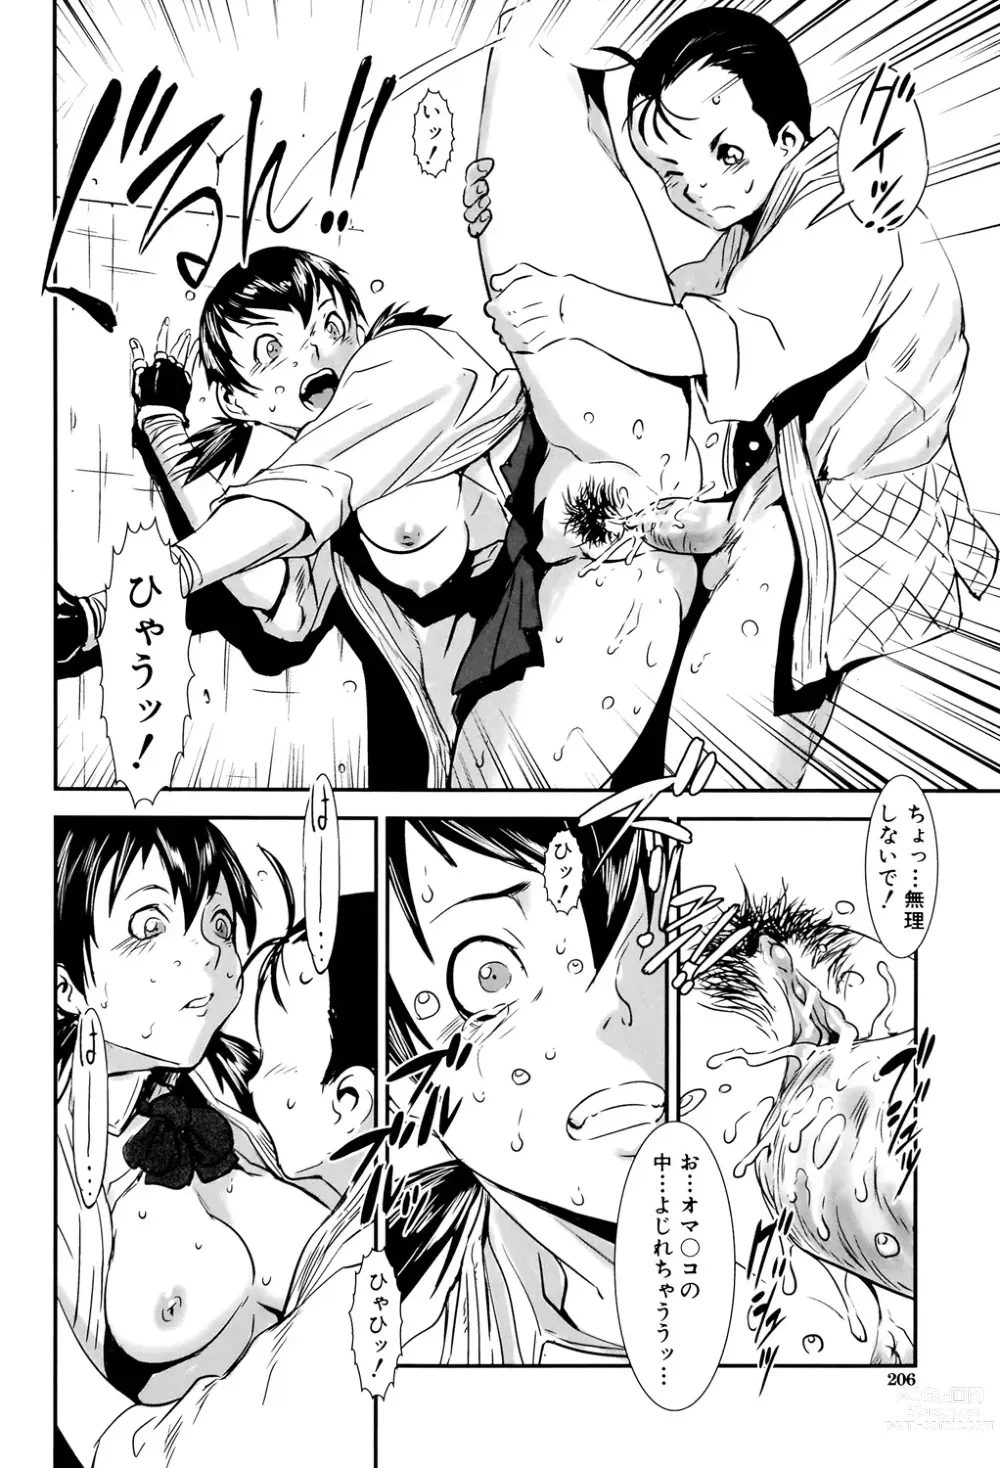 Page 206 of manga MAS HOLic